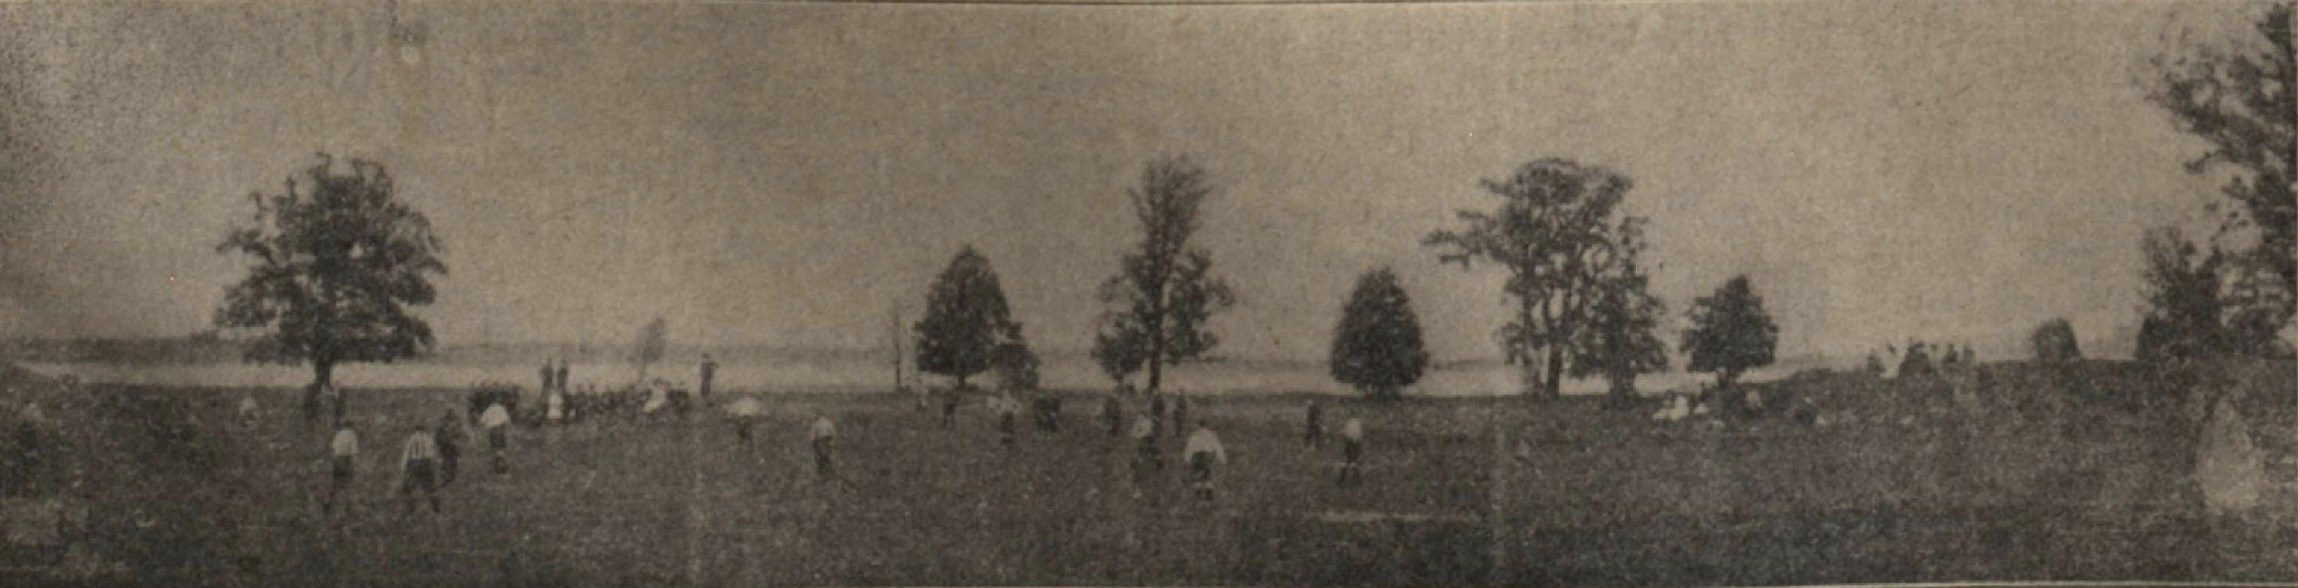 Kaiserwald laukums 1911